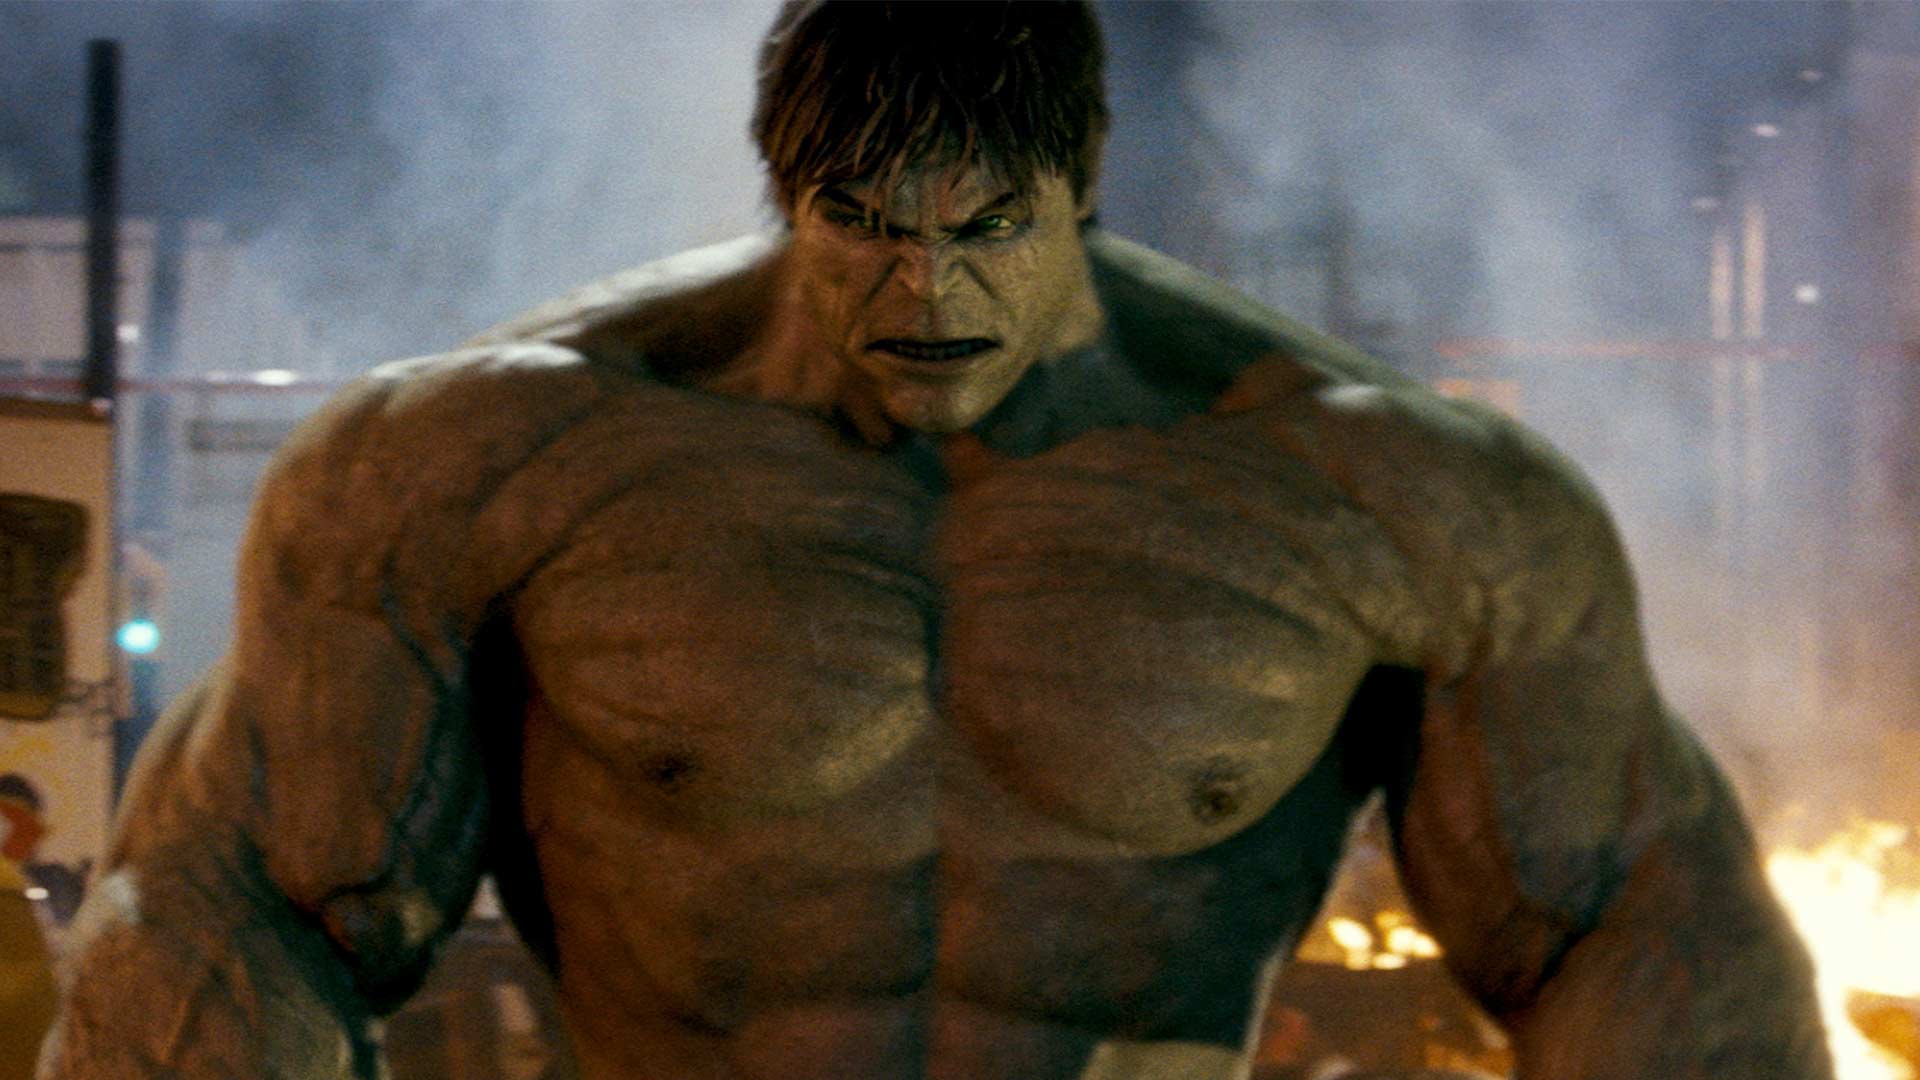 The Incredible Hulk | TBS.com